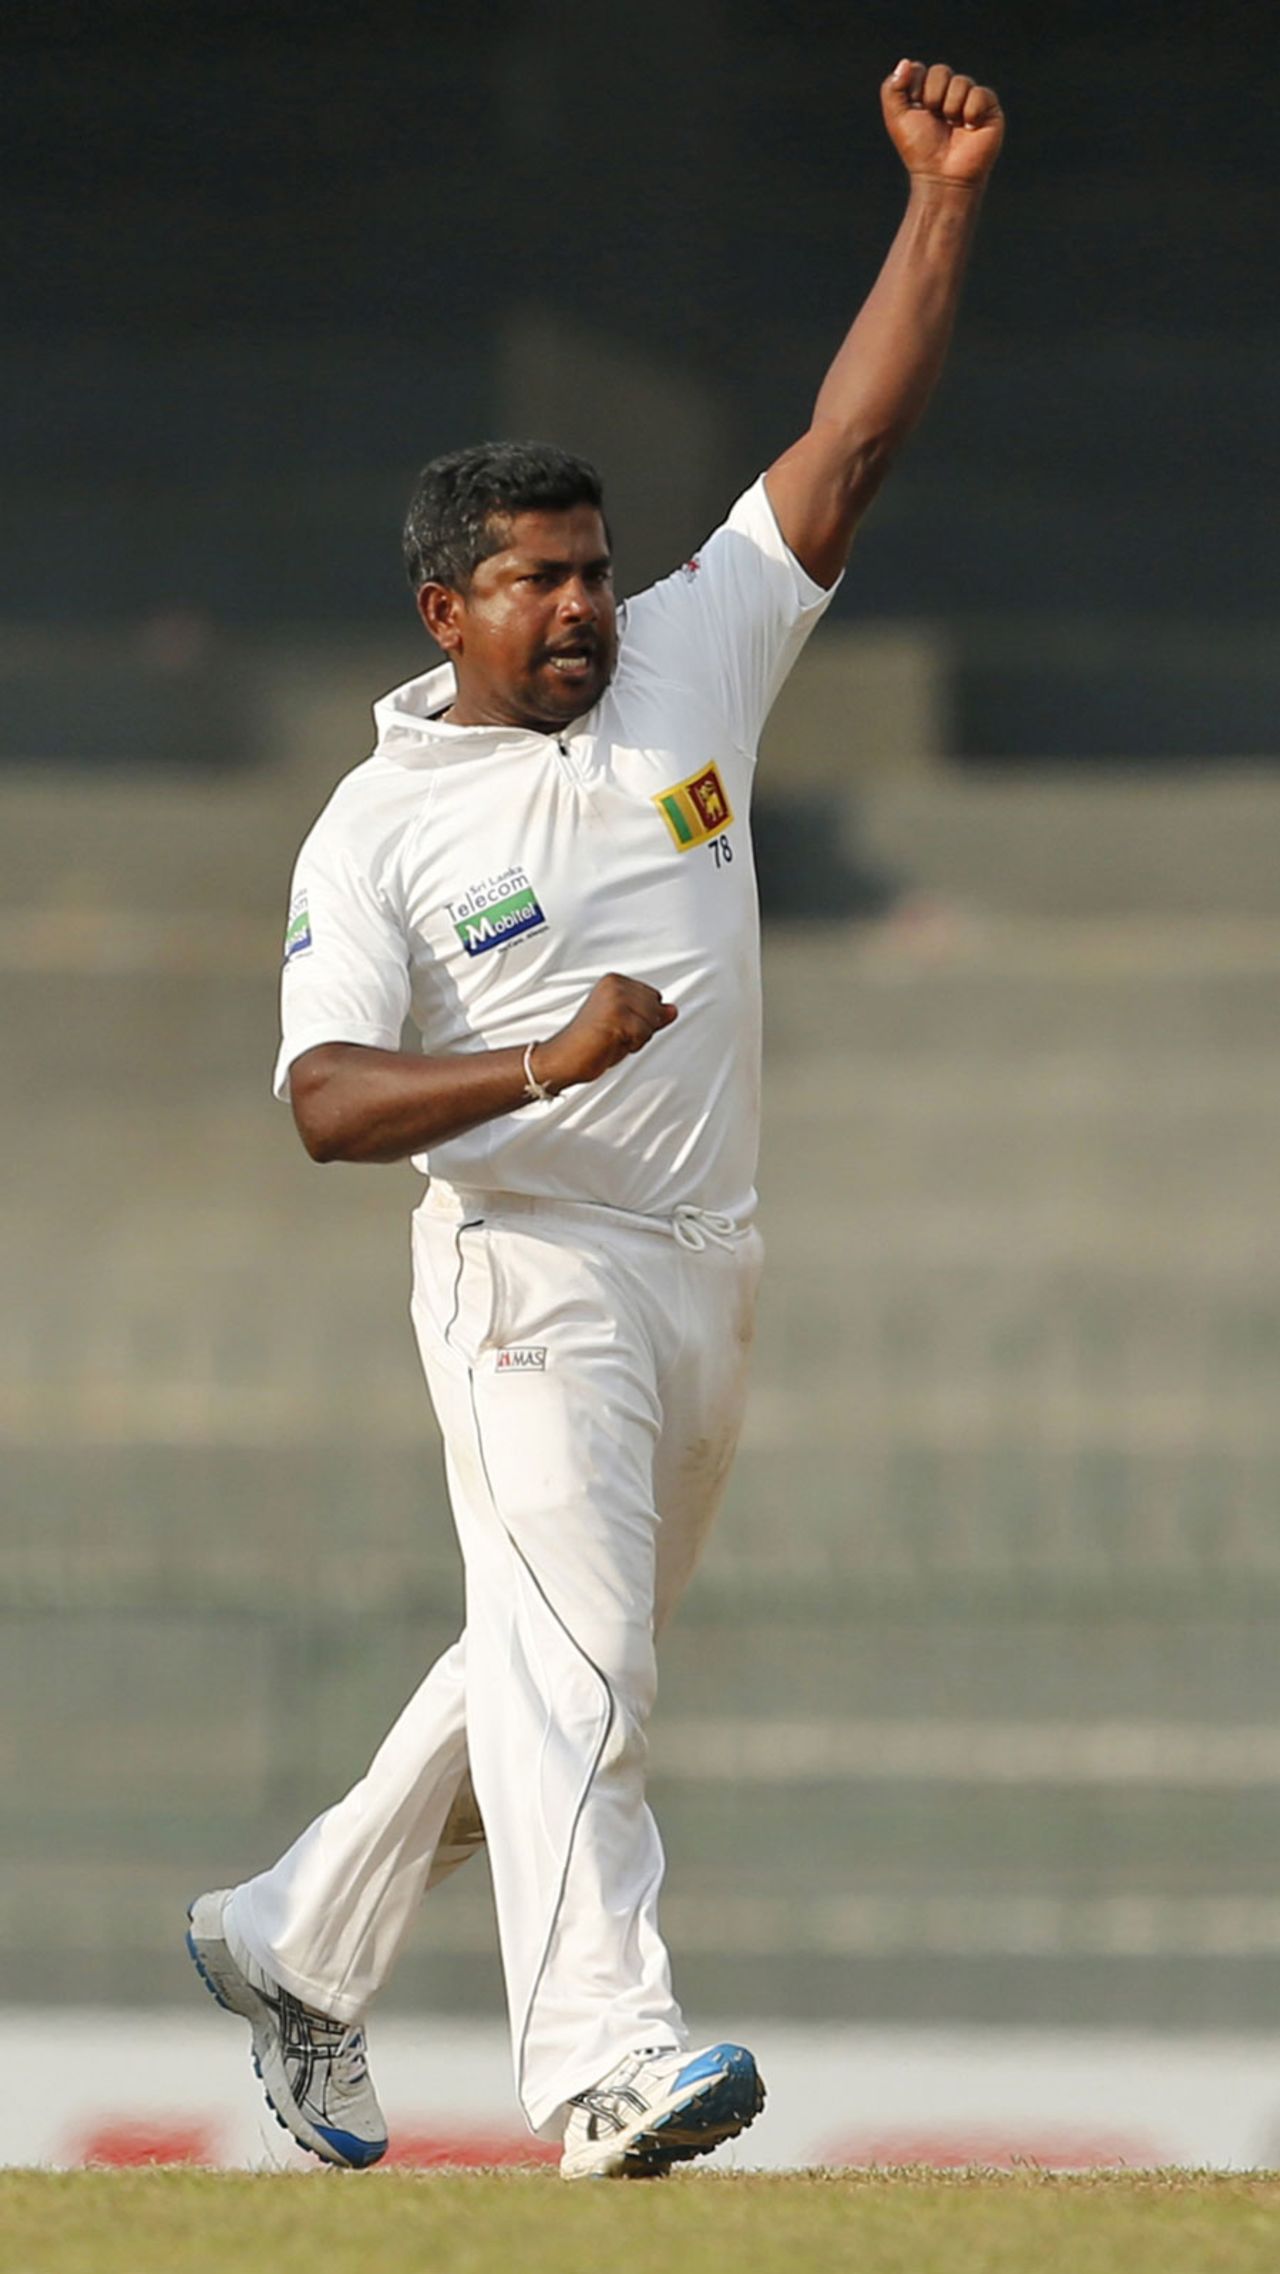 Rangana Herath celebrates after dismissing Nasir Hossain, Sri Lanka v Bangladesh, 2nd Test, 1st day, Colombo, March 16, 2013